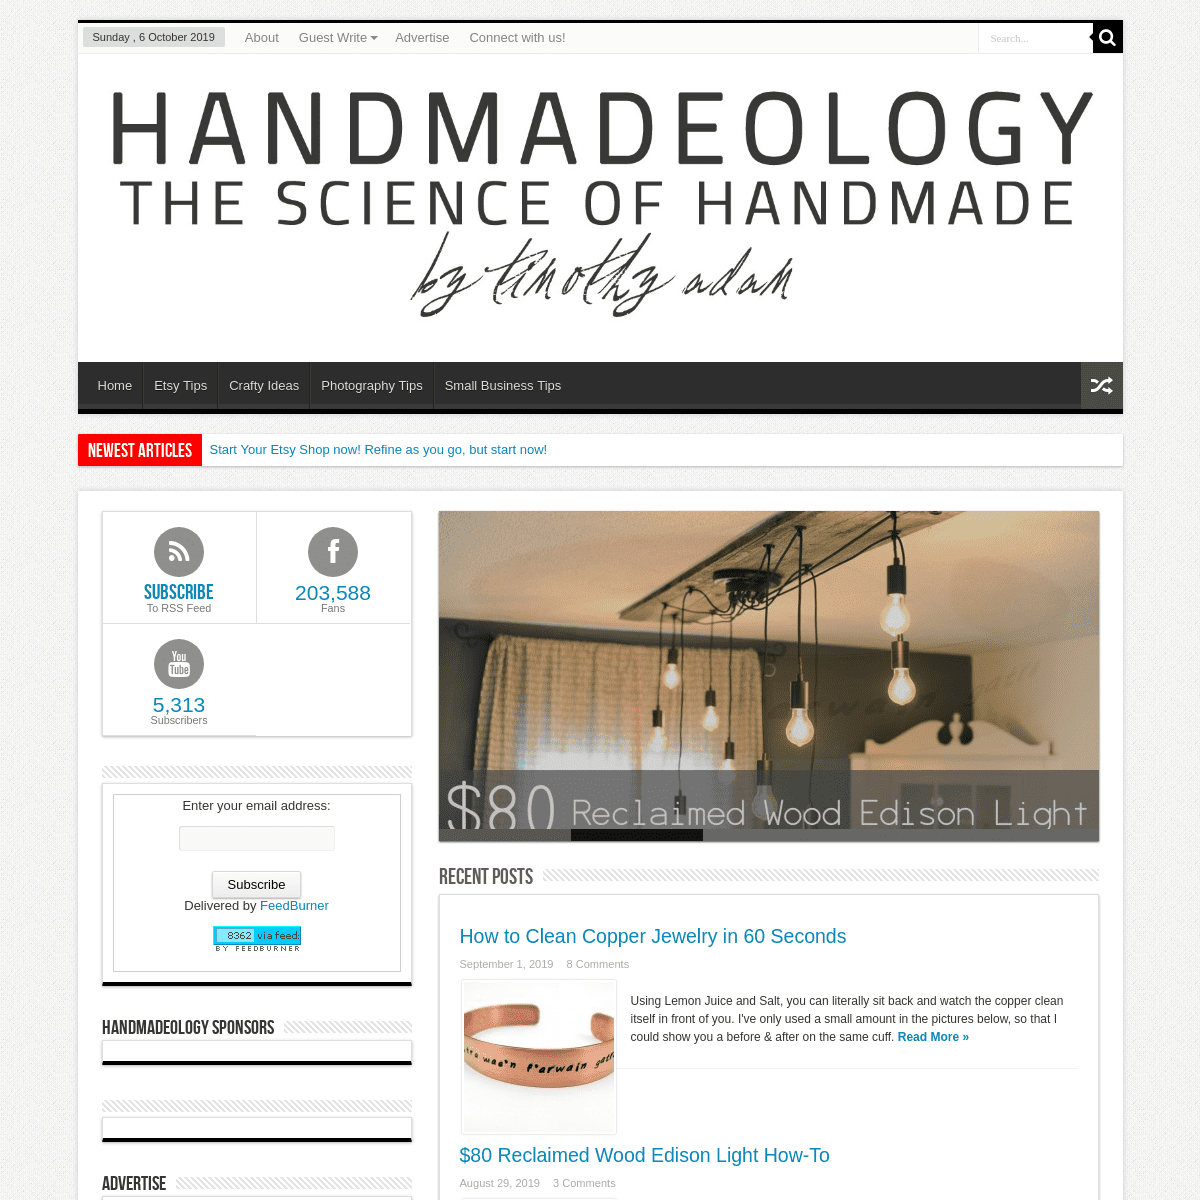 A complete backup of handmadeology.com